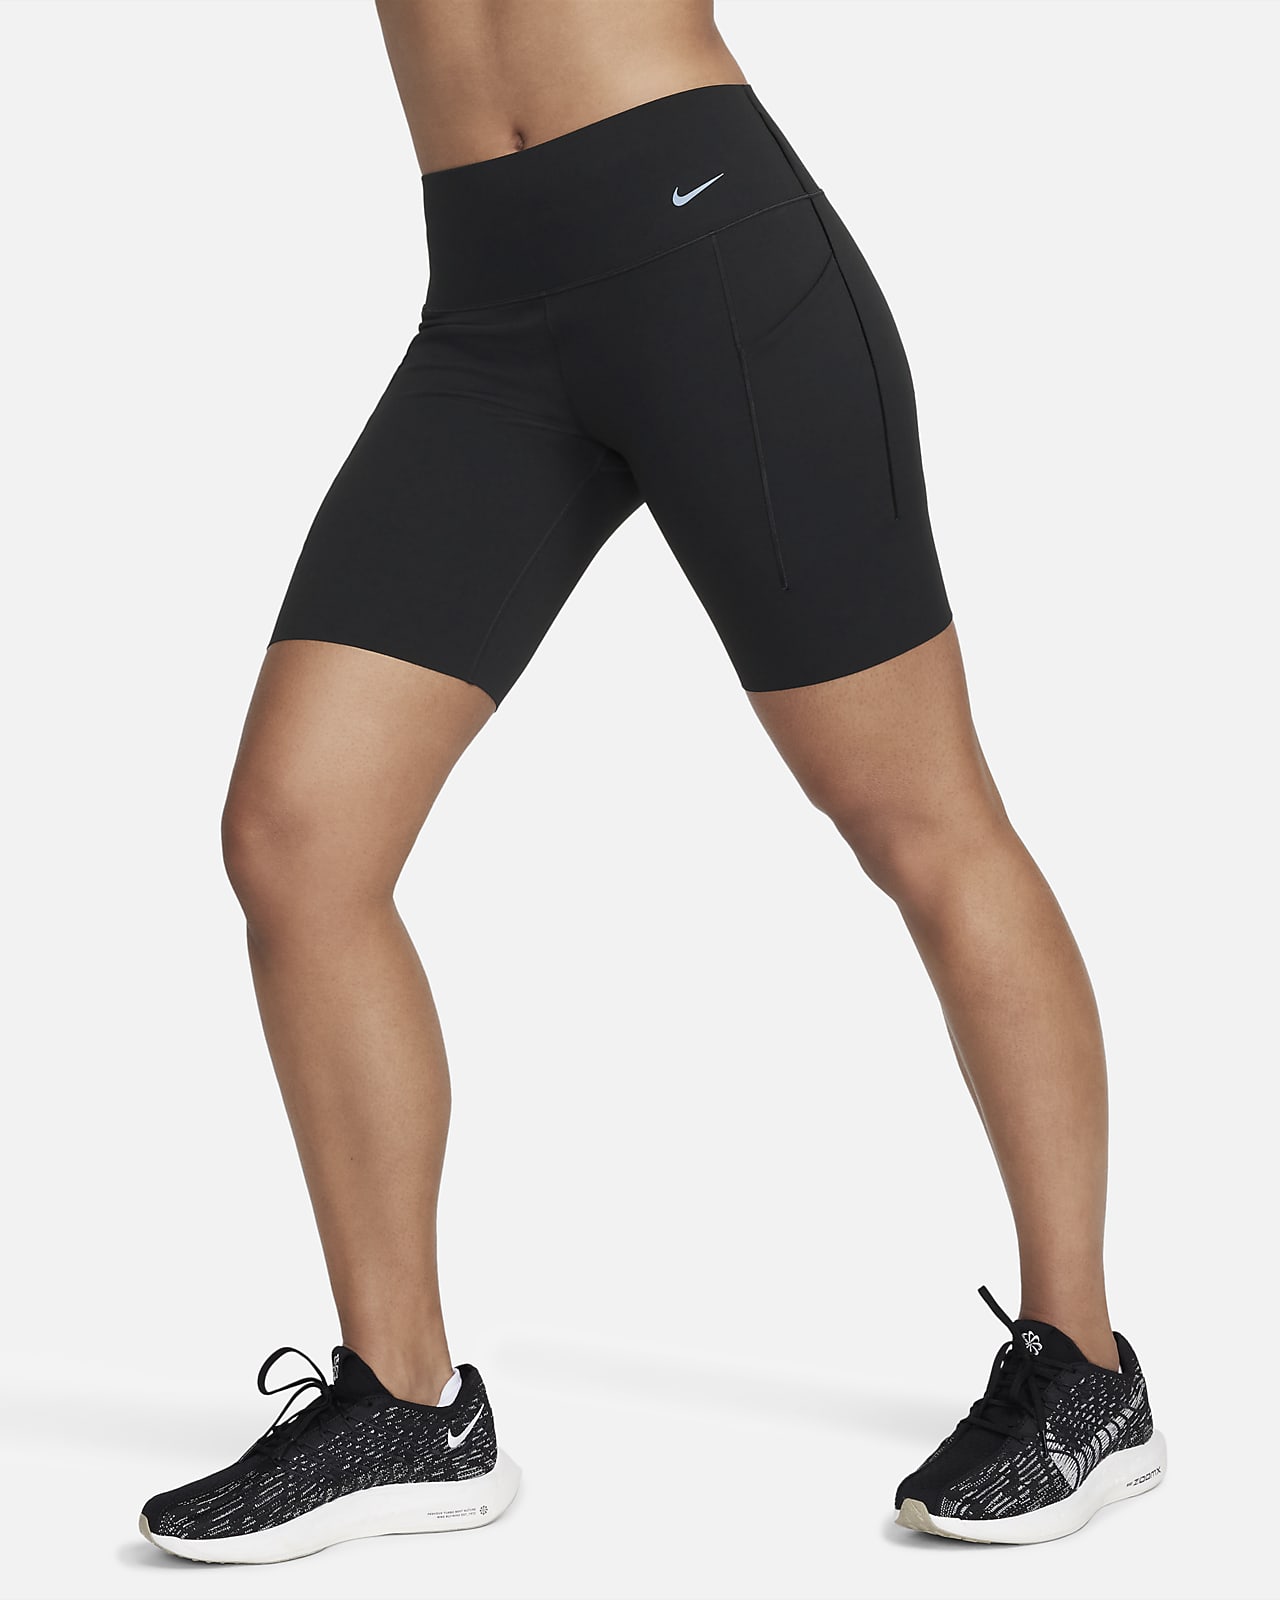 Nike Yoga Luxe Biker Short Size 3X - $30 (40% Off Retail) - From Julia